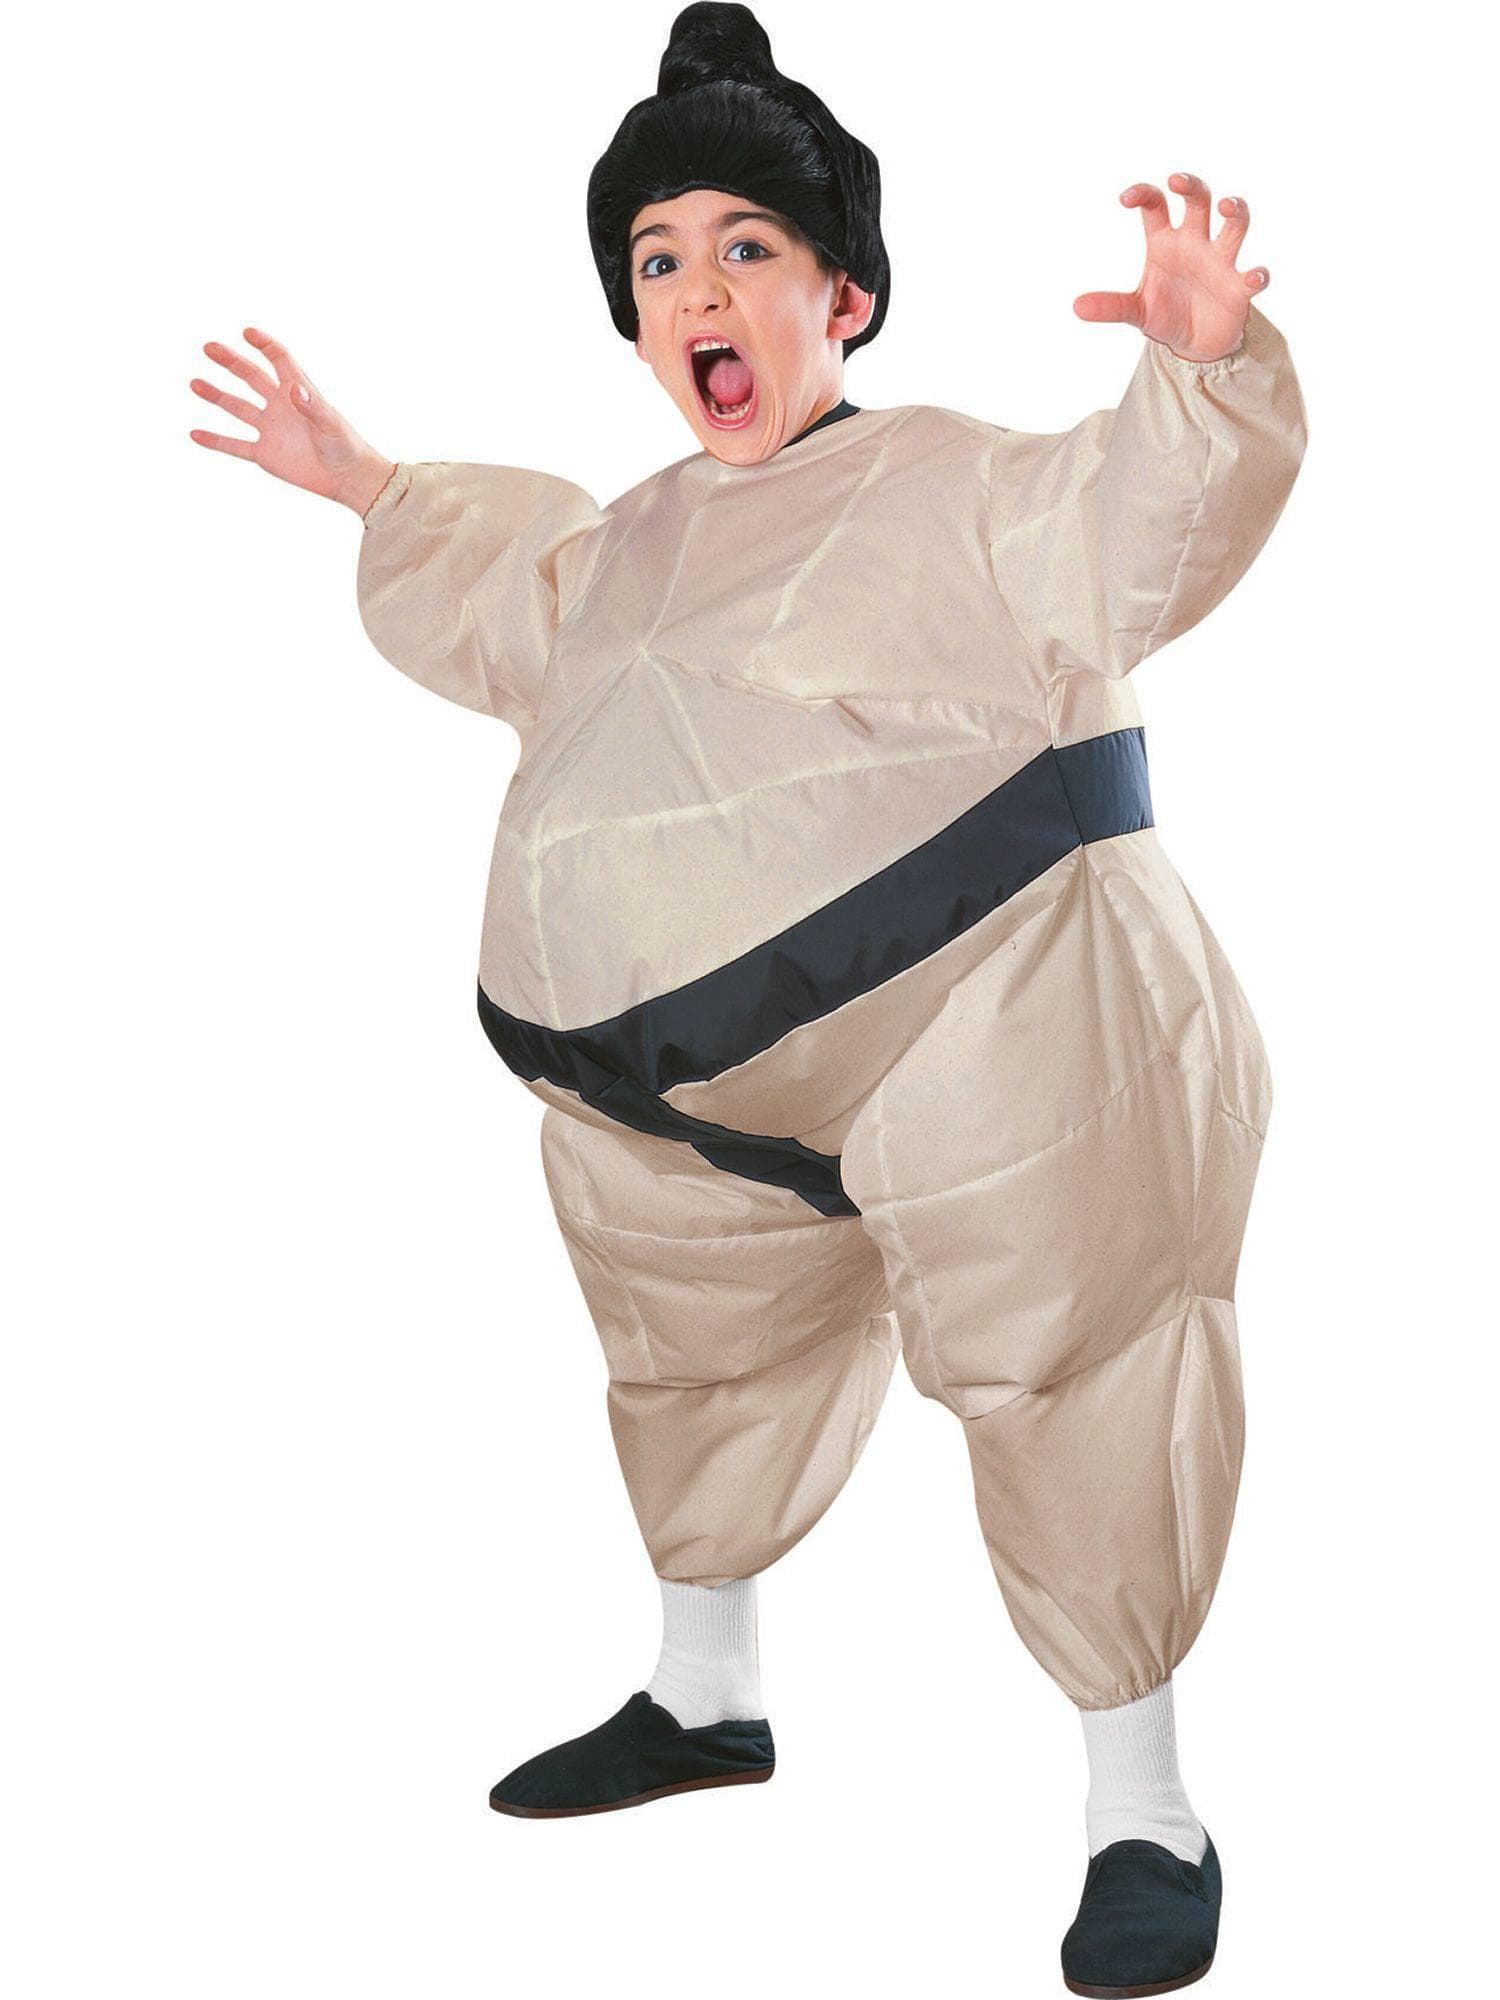 Kids' Inflatable Sumo Costume - costumes.com